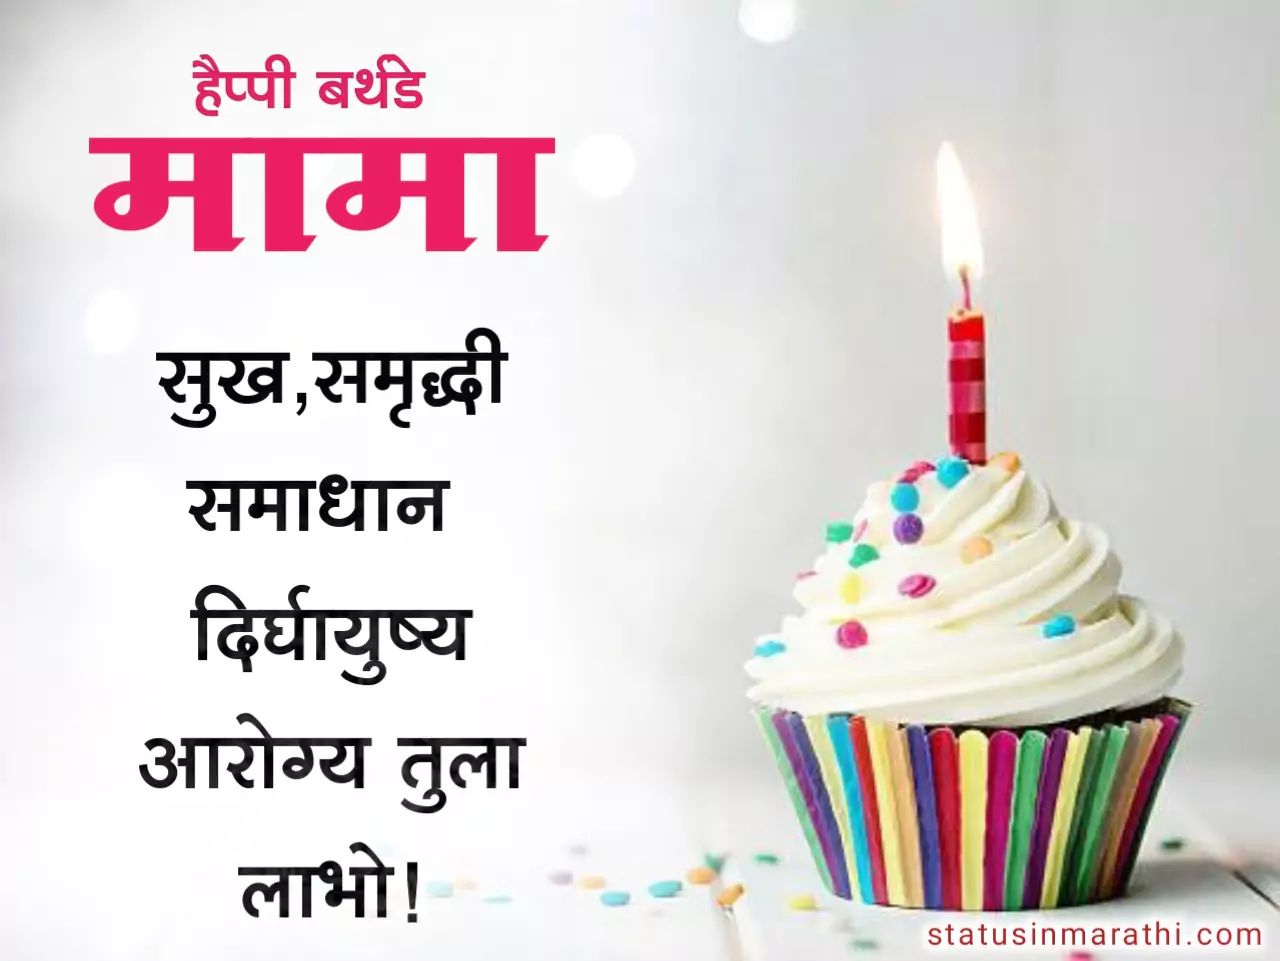 Happy Birthday wishes for mama in marathi